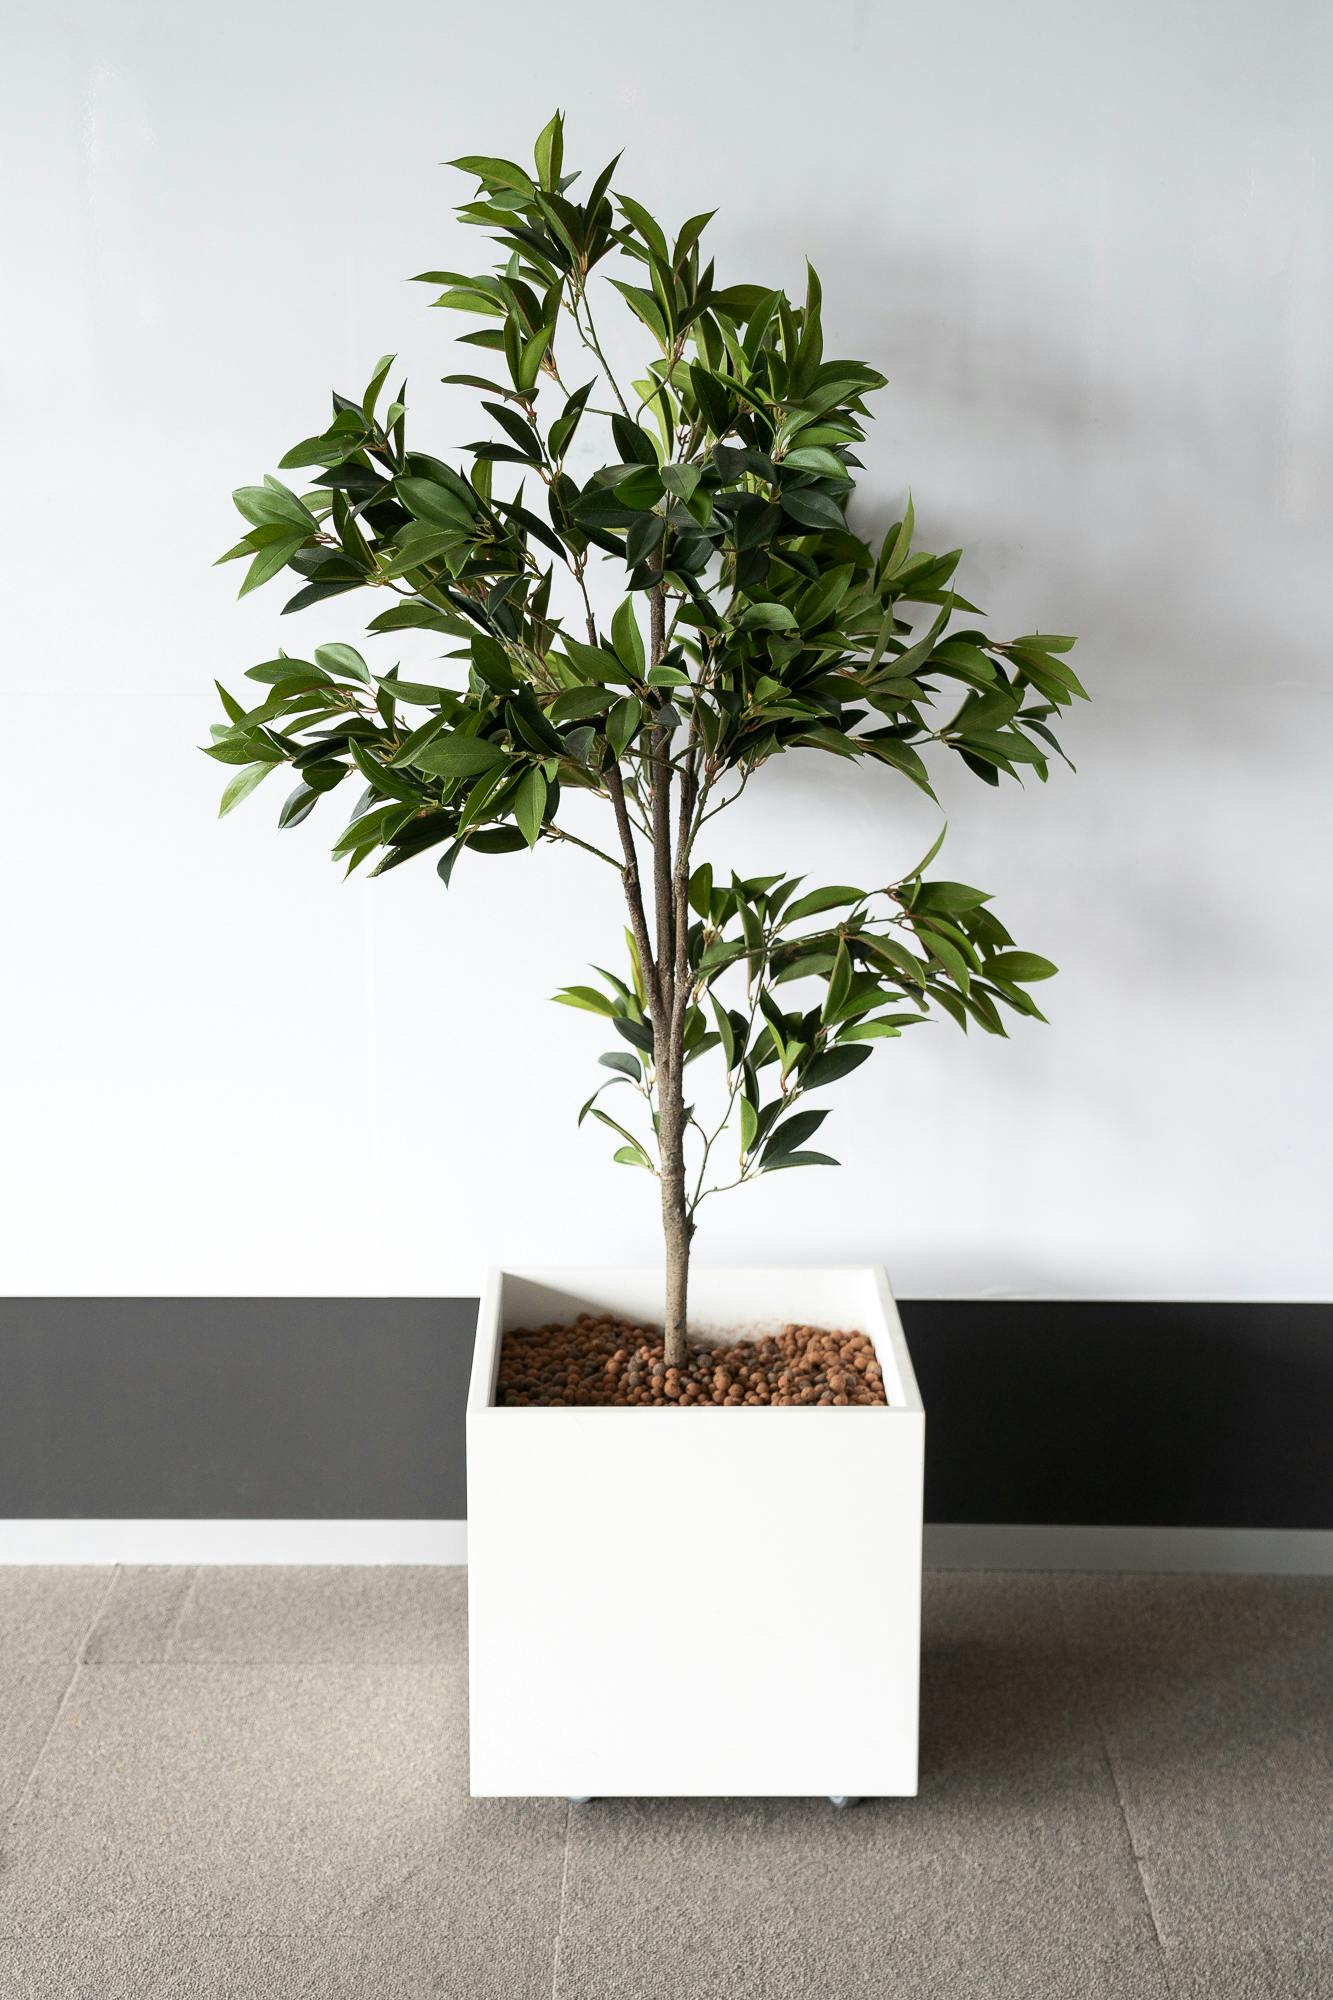 Square planter - shrub - Second hand quality "Miscellaneous" - Relieve Furniture